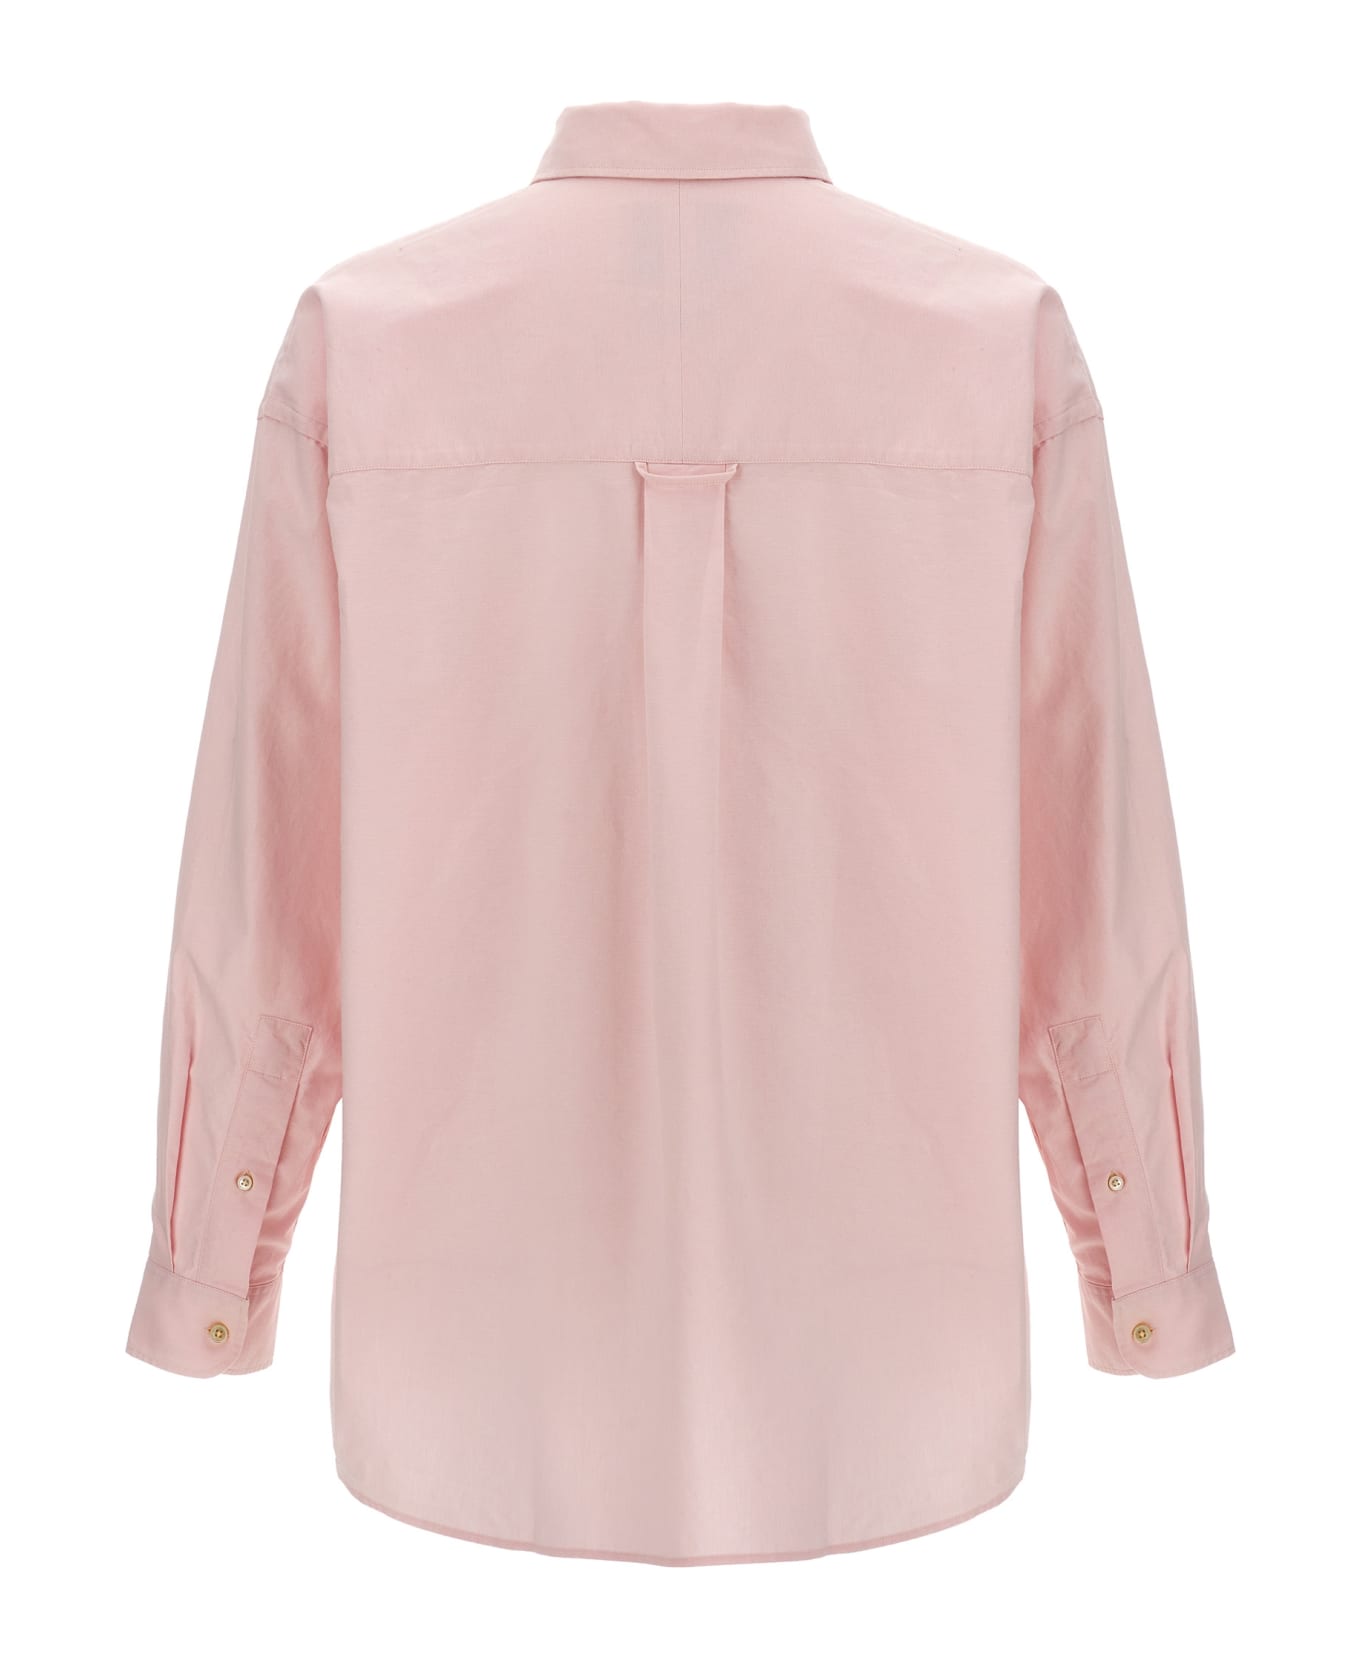 Studio Nicholson Oversize Shirt - Pink